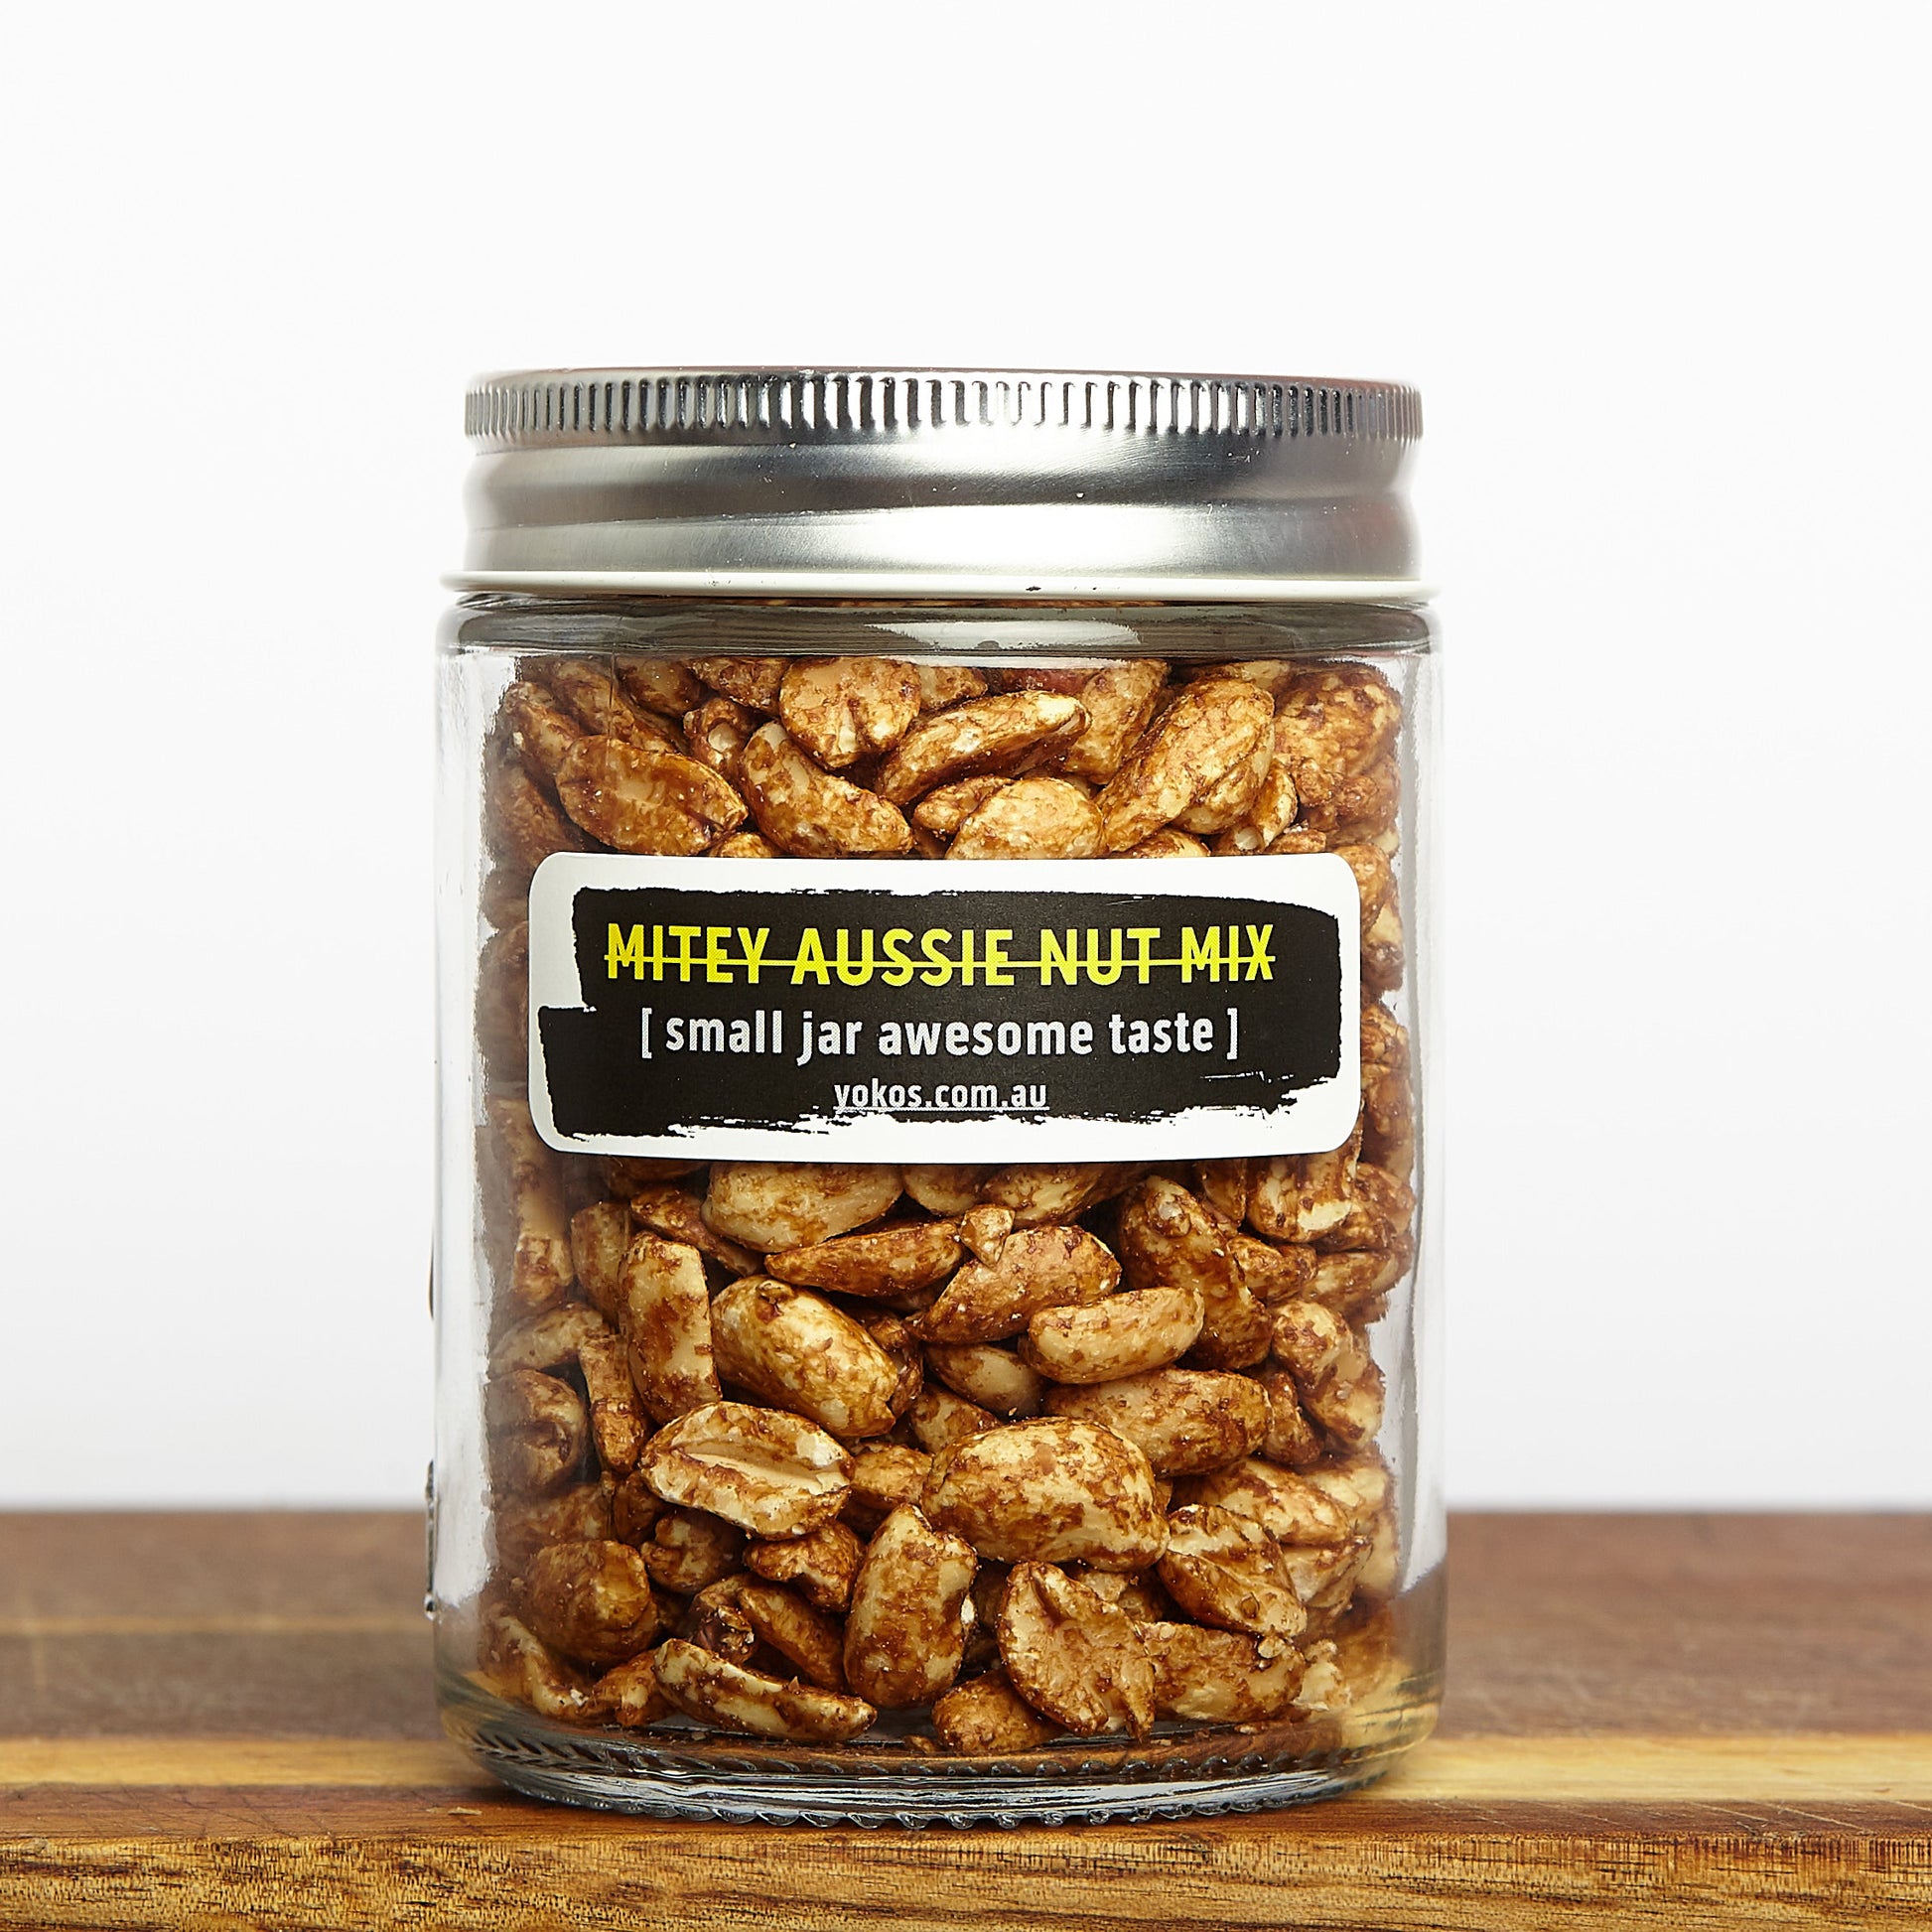 Kingaroy Mighty Aussie Nuts made with gluten free vegemite. Vegan product. Looks scrumcious!